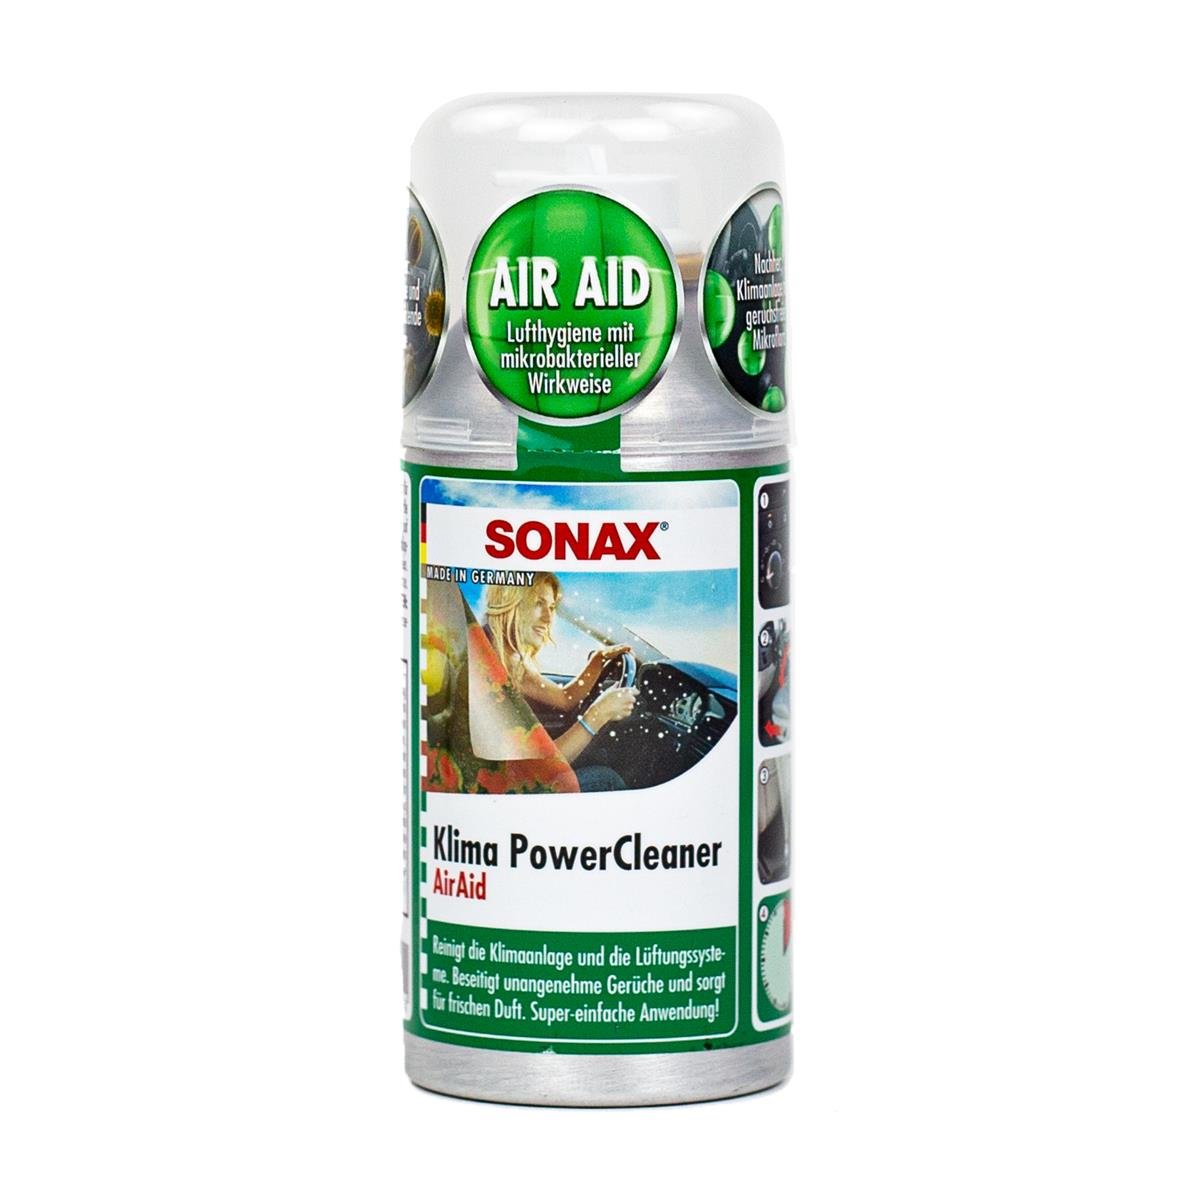 SONAX KlimaPowerCleaner Apple-Fresh Air conditioner cleaner / disinfe,  11,99 €